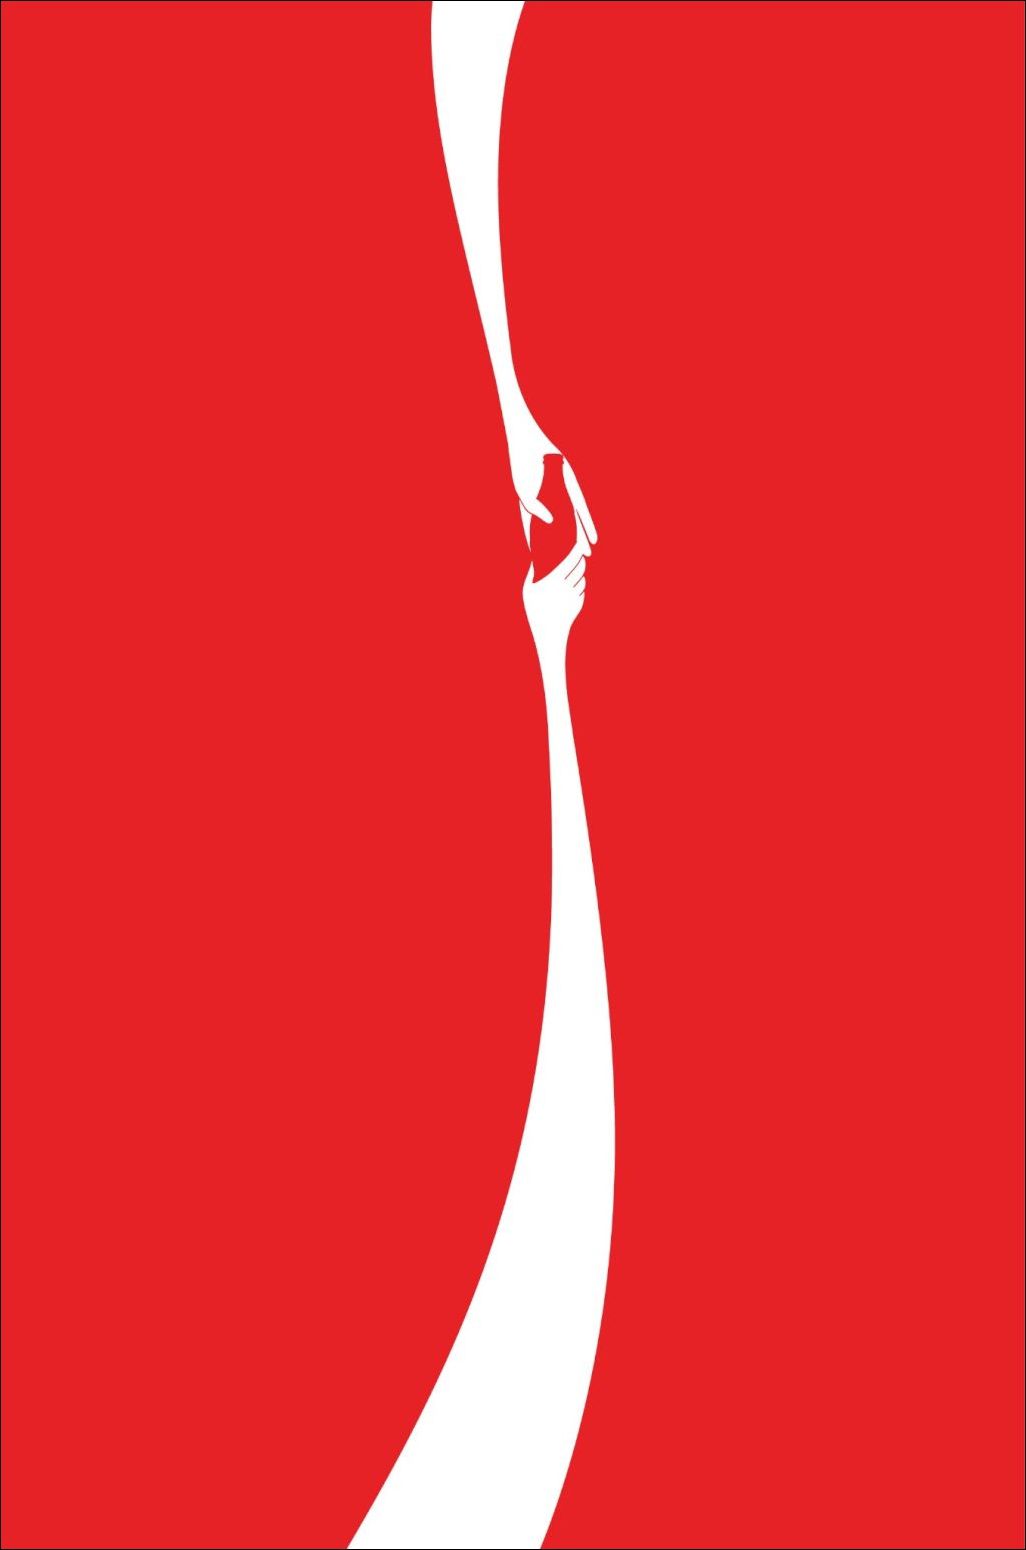 14 Creative Coke Ads - Image #1